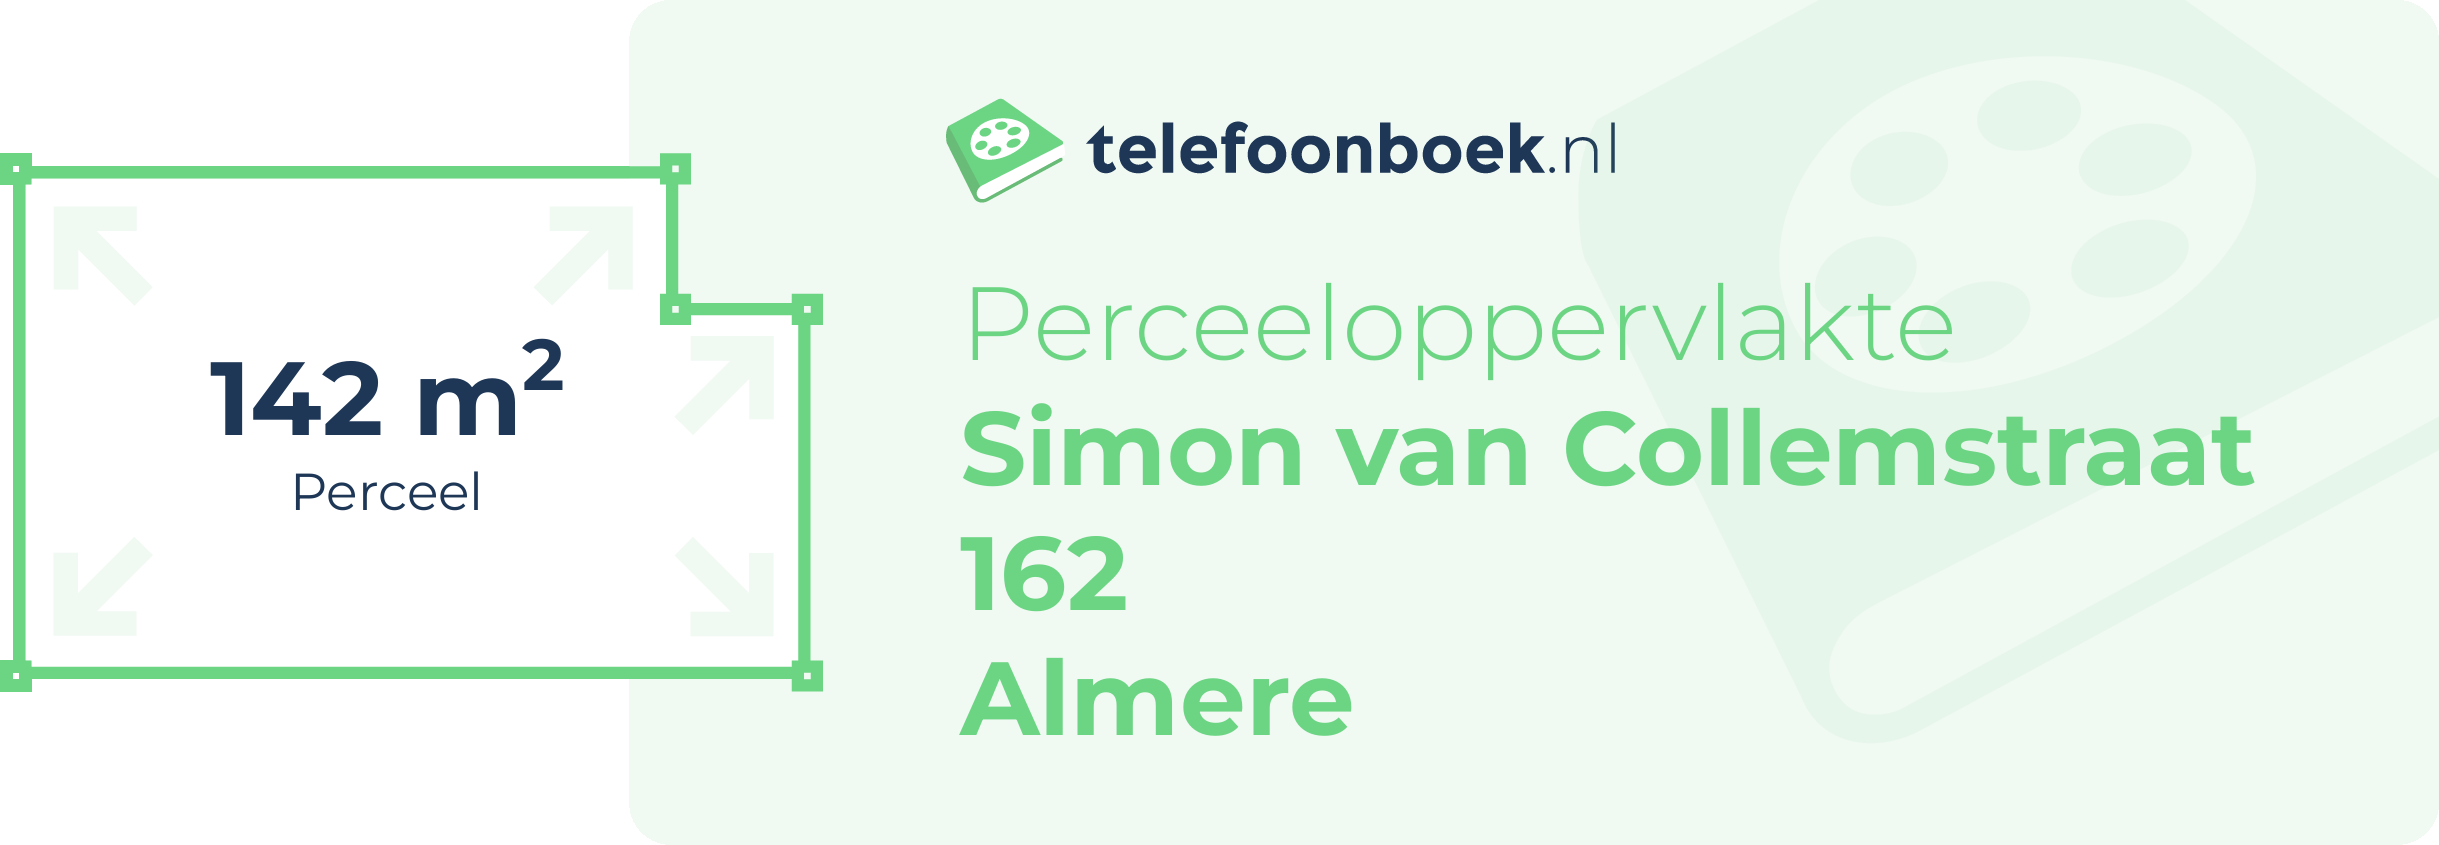 Perceeloppervlakte Simon Van Collemstraat 162 Almere